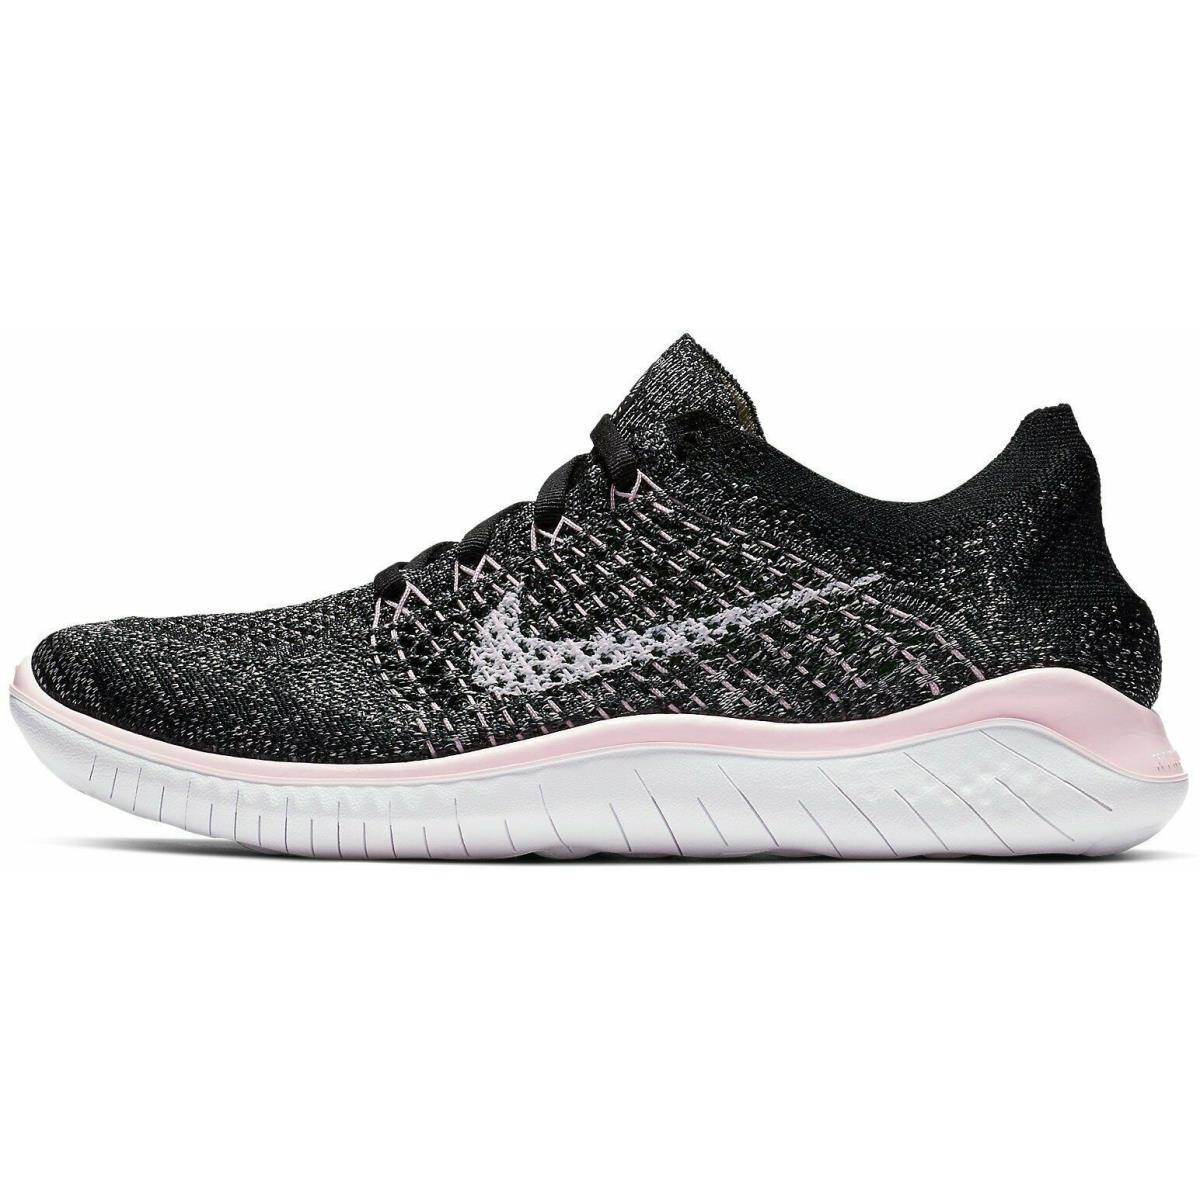 Womens Nike Free RN Flyknit 2018 Running Shoes -black/pink 942839-007 -sz 9 -new